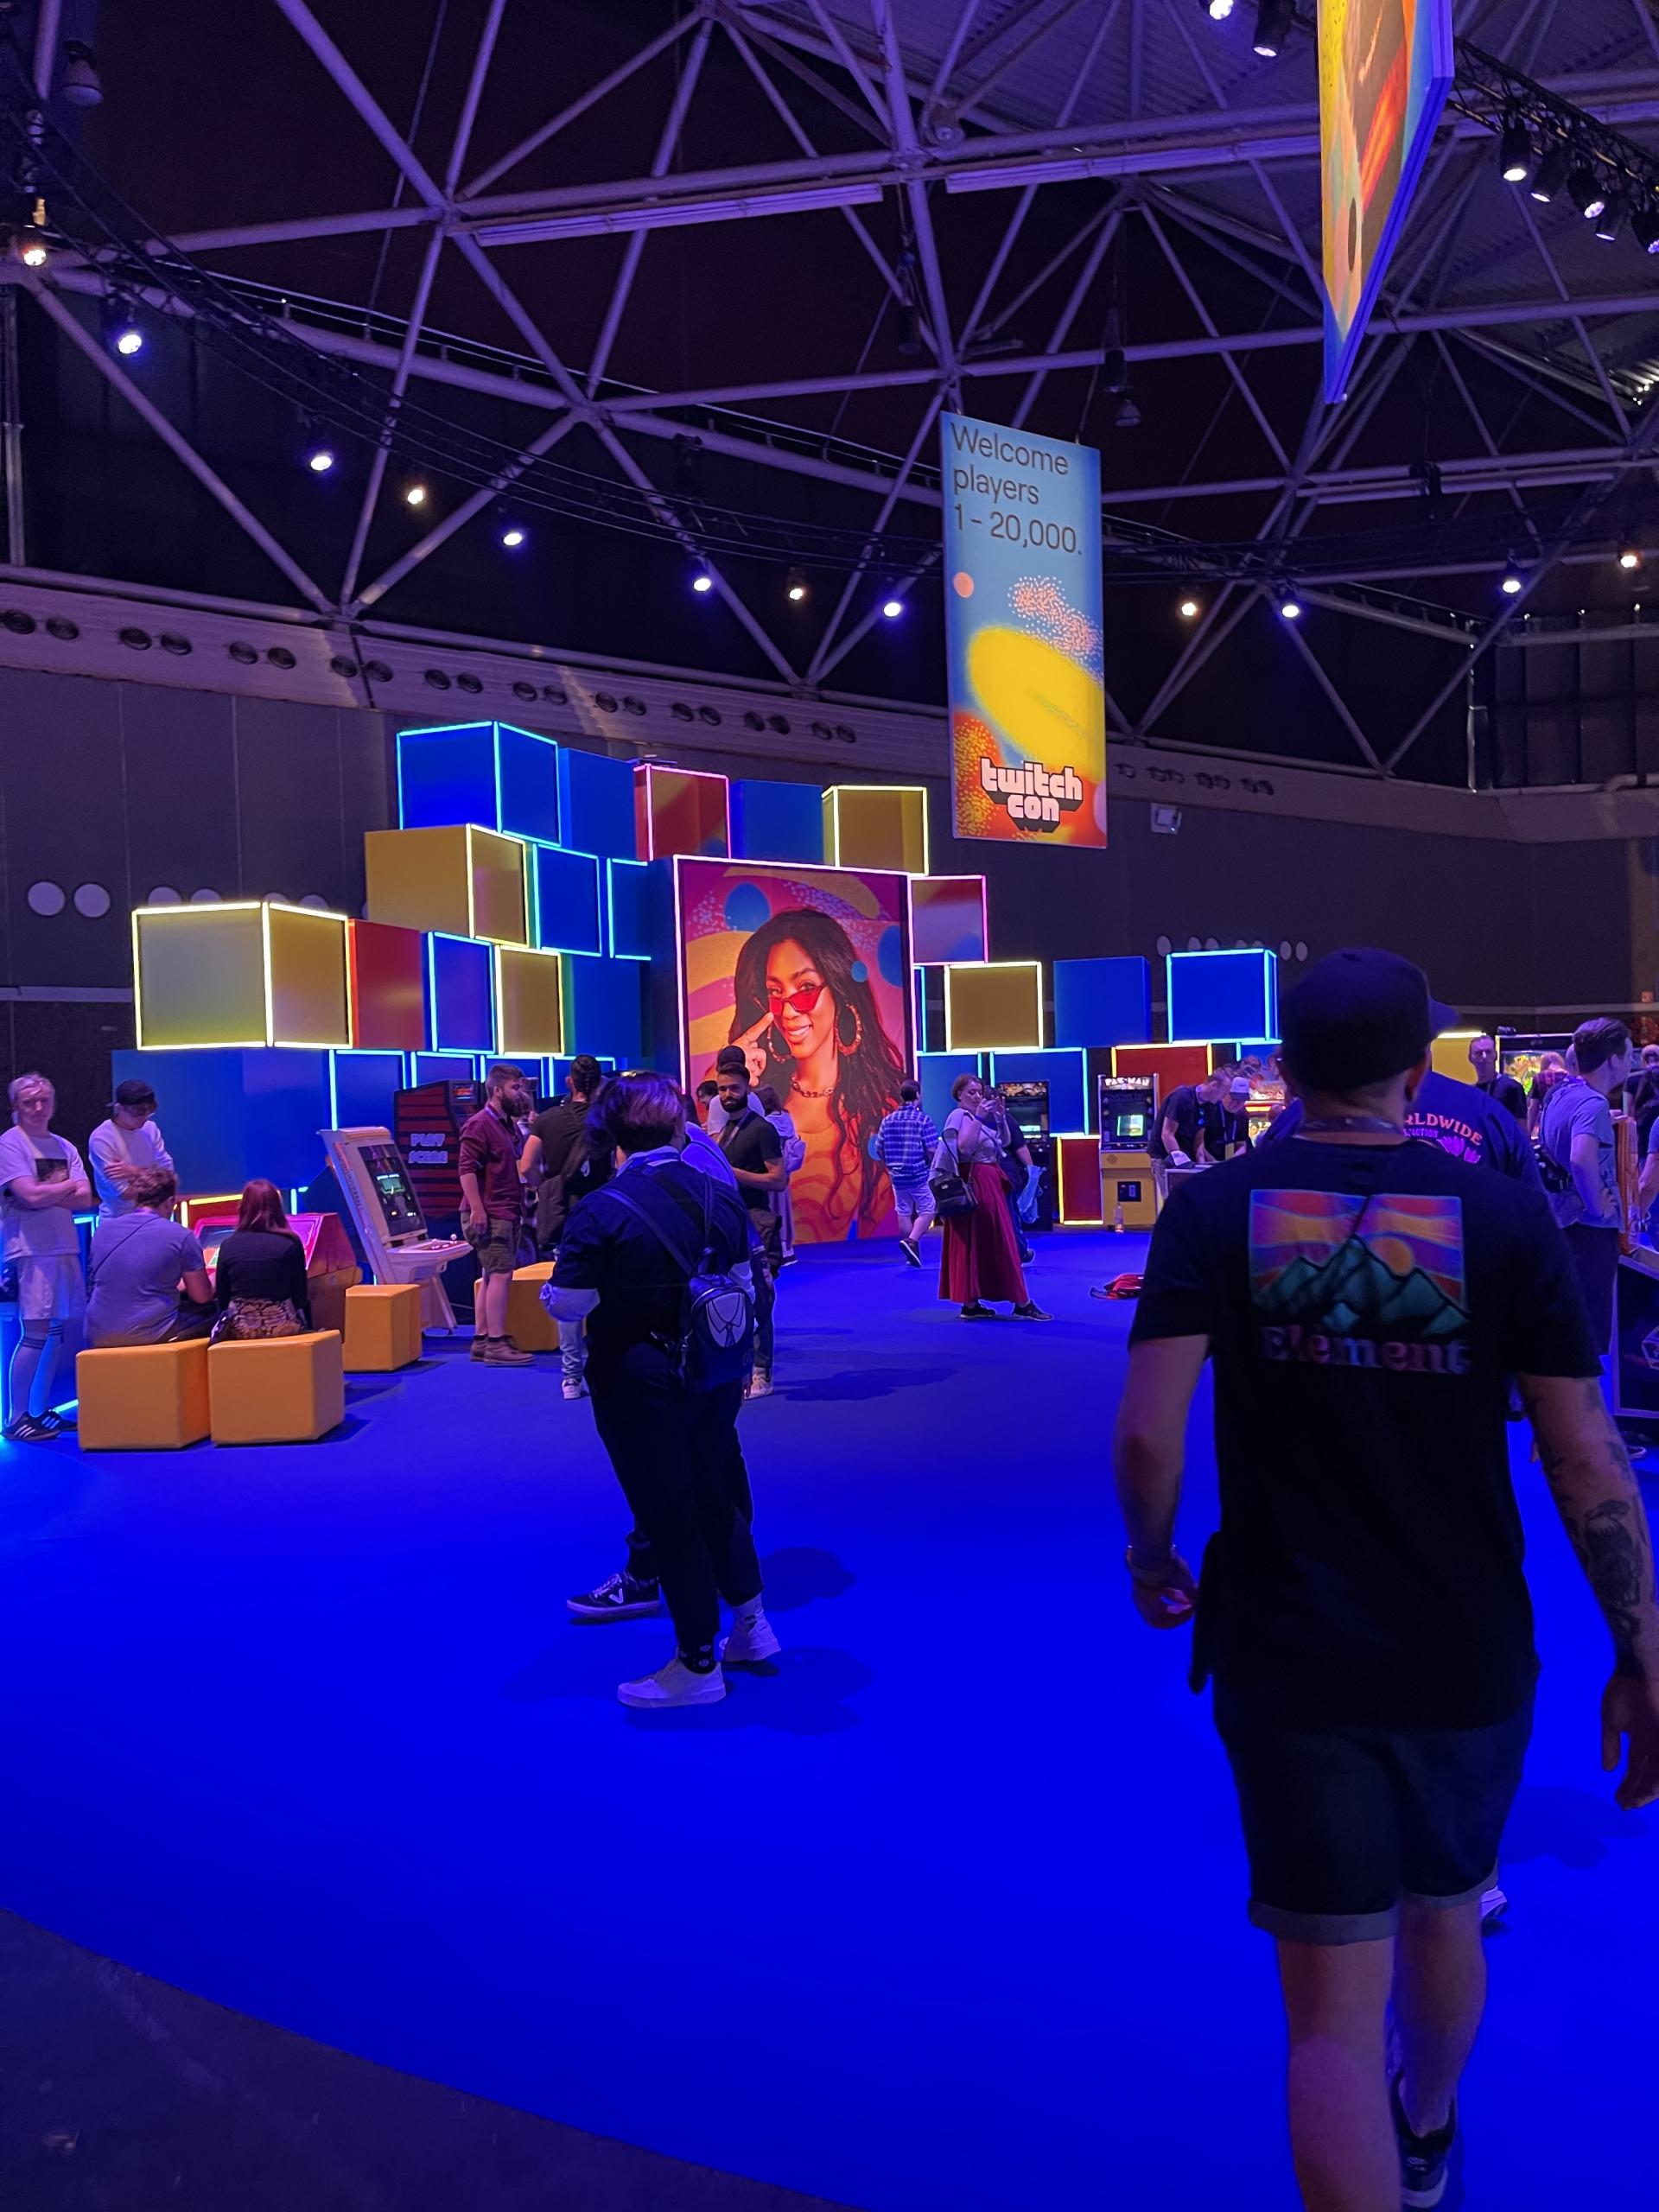 Arcade area at TwitchCon 2022